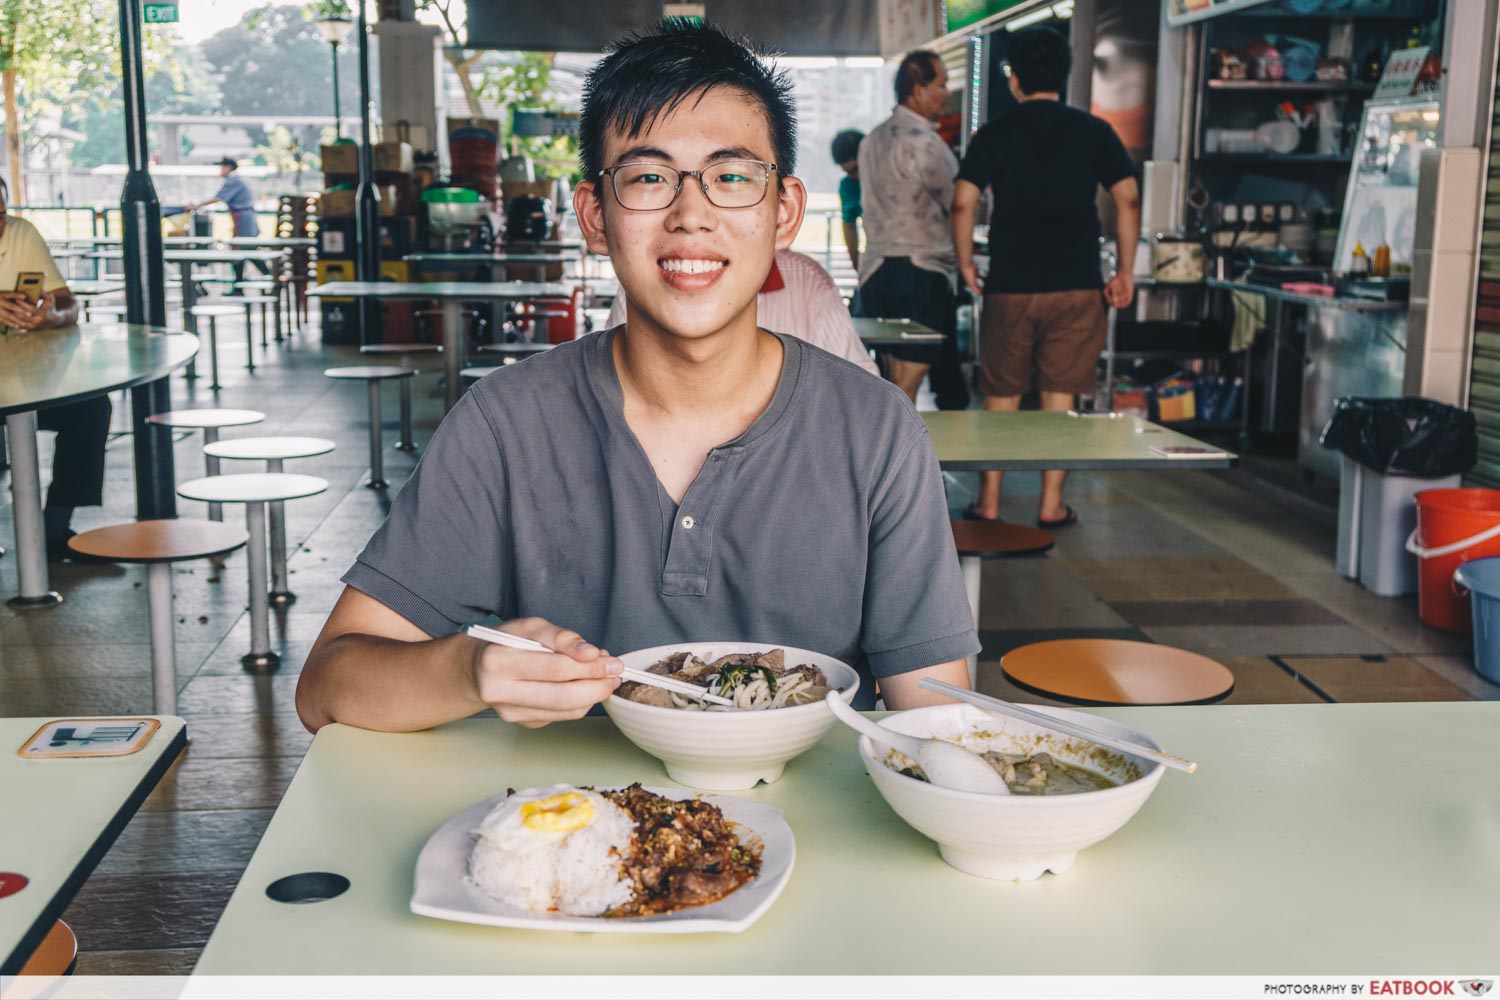 omar's halal thai beef noodles verdict